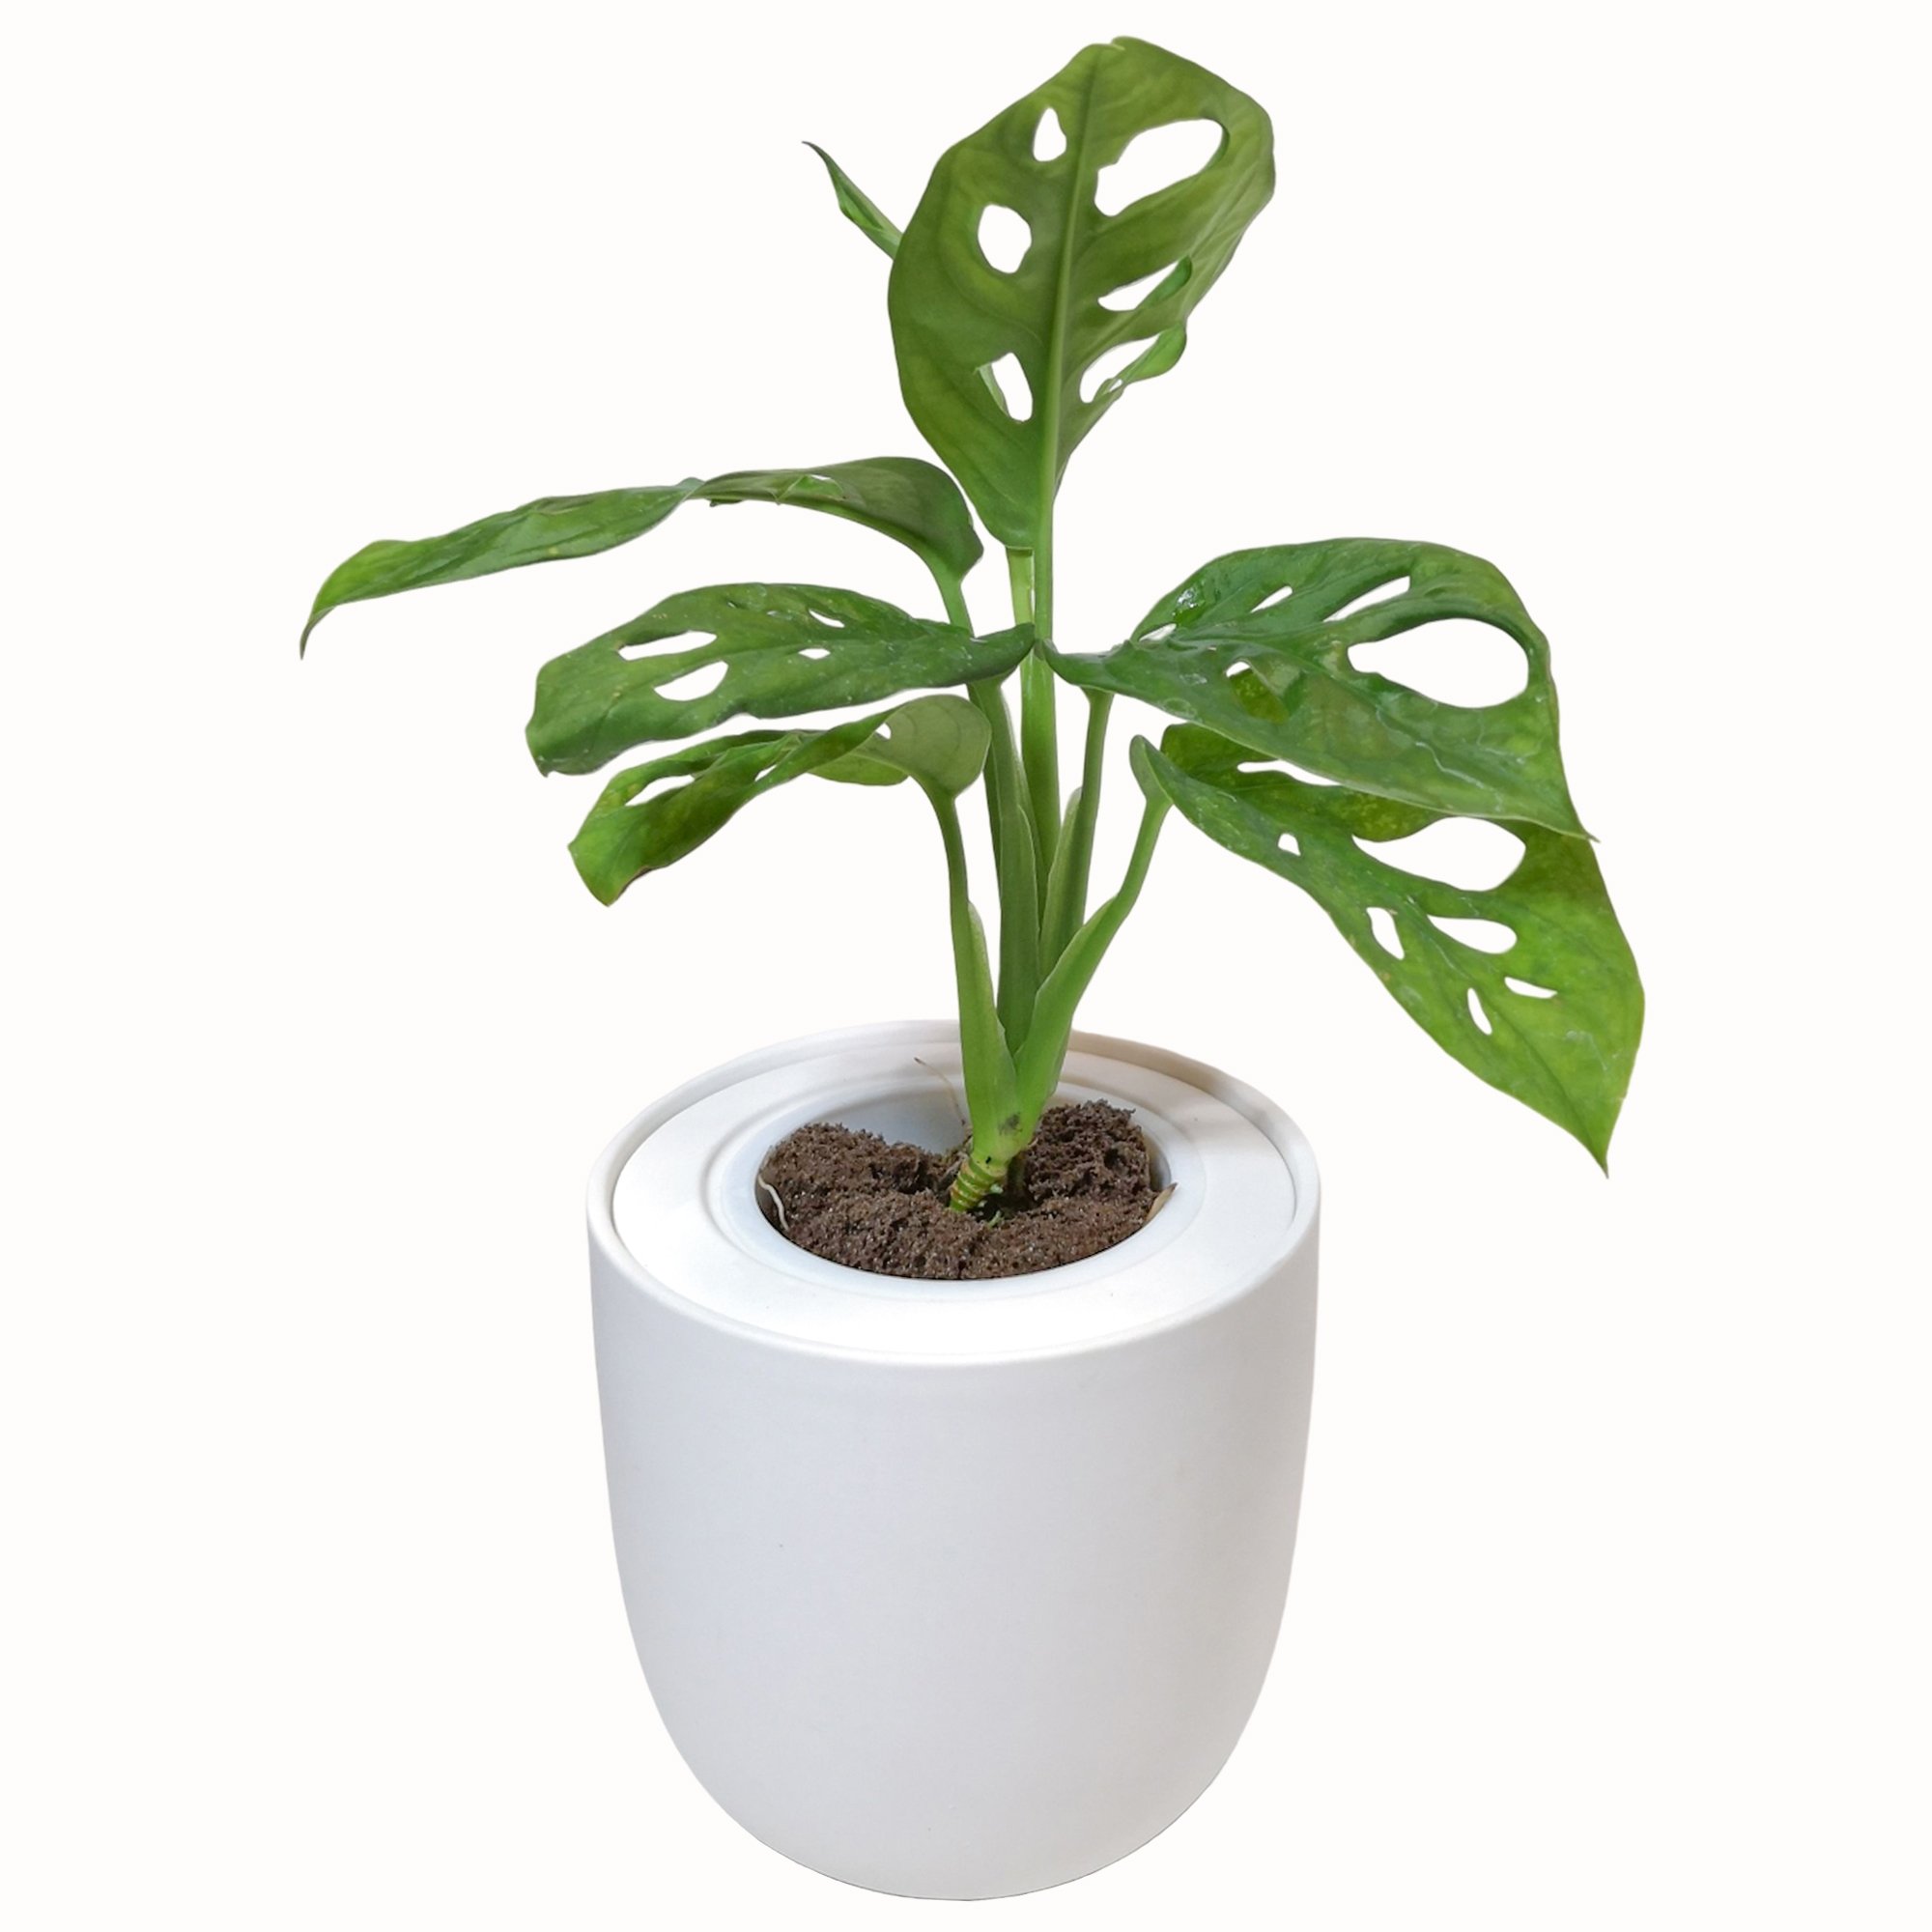 Hydroponic Monstera Monkey Mask Live Plants Growing Kit With White Ceramic Pot - Monstera Monkey Mask-White